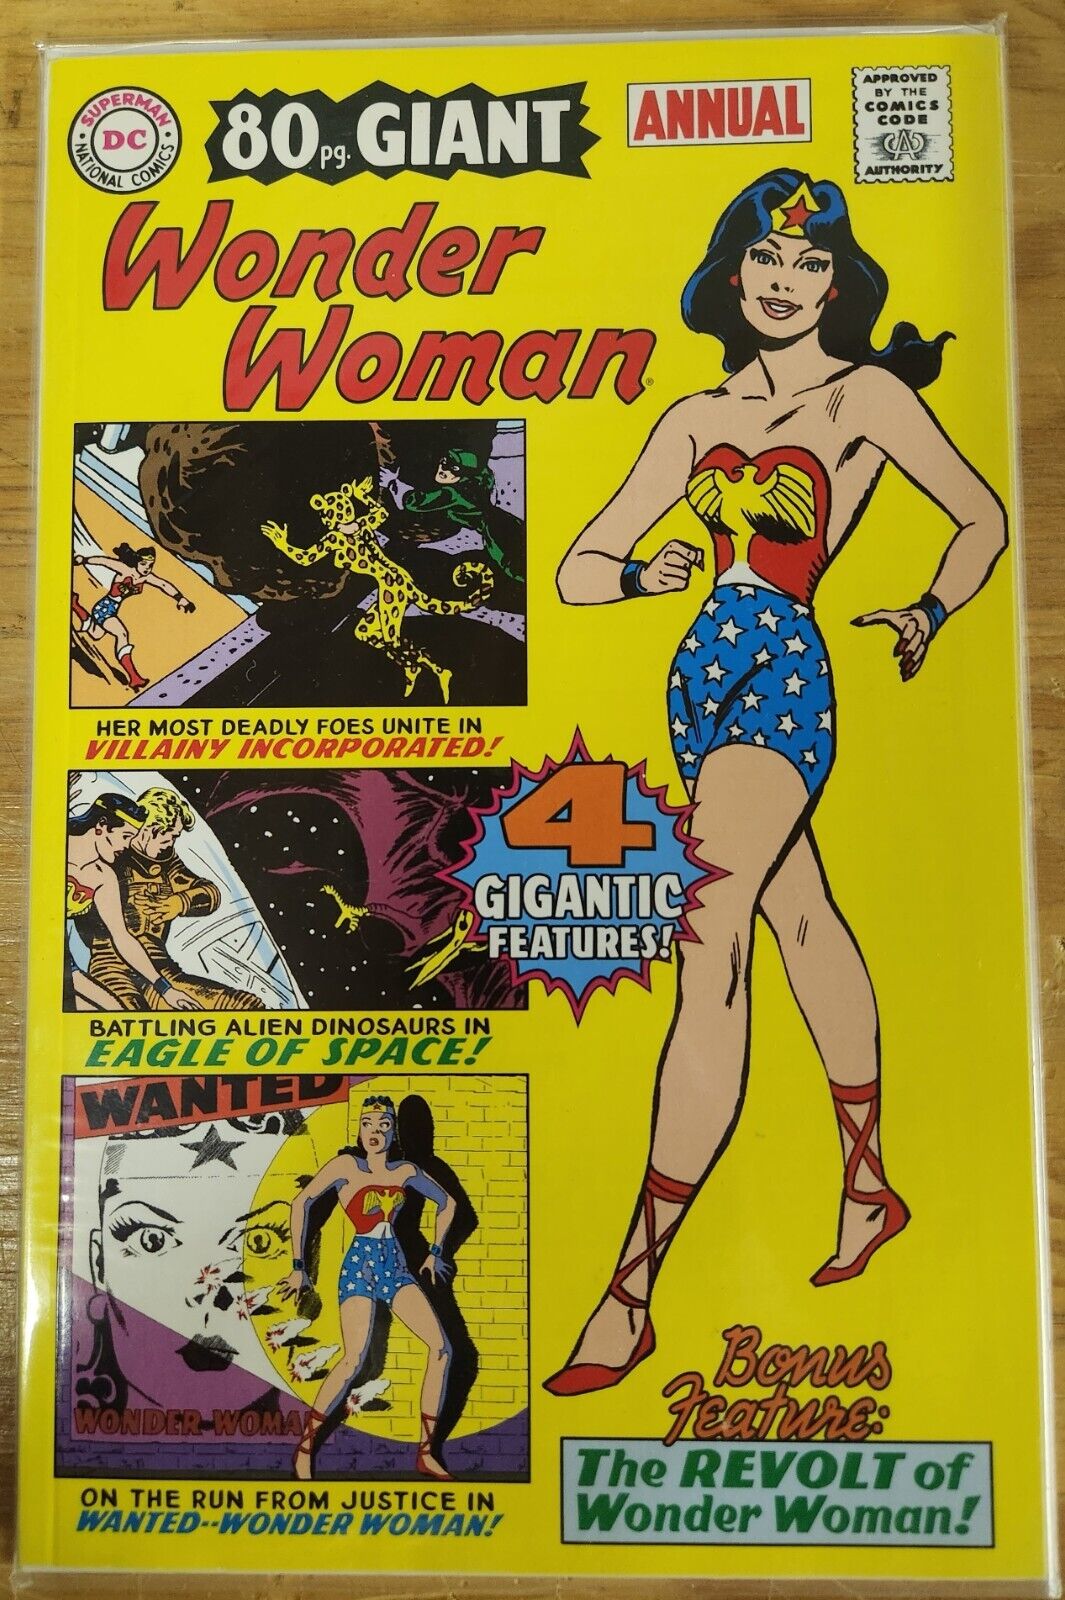 Wonder Woman Annual DC Comics (2002) 80 Page Giant